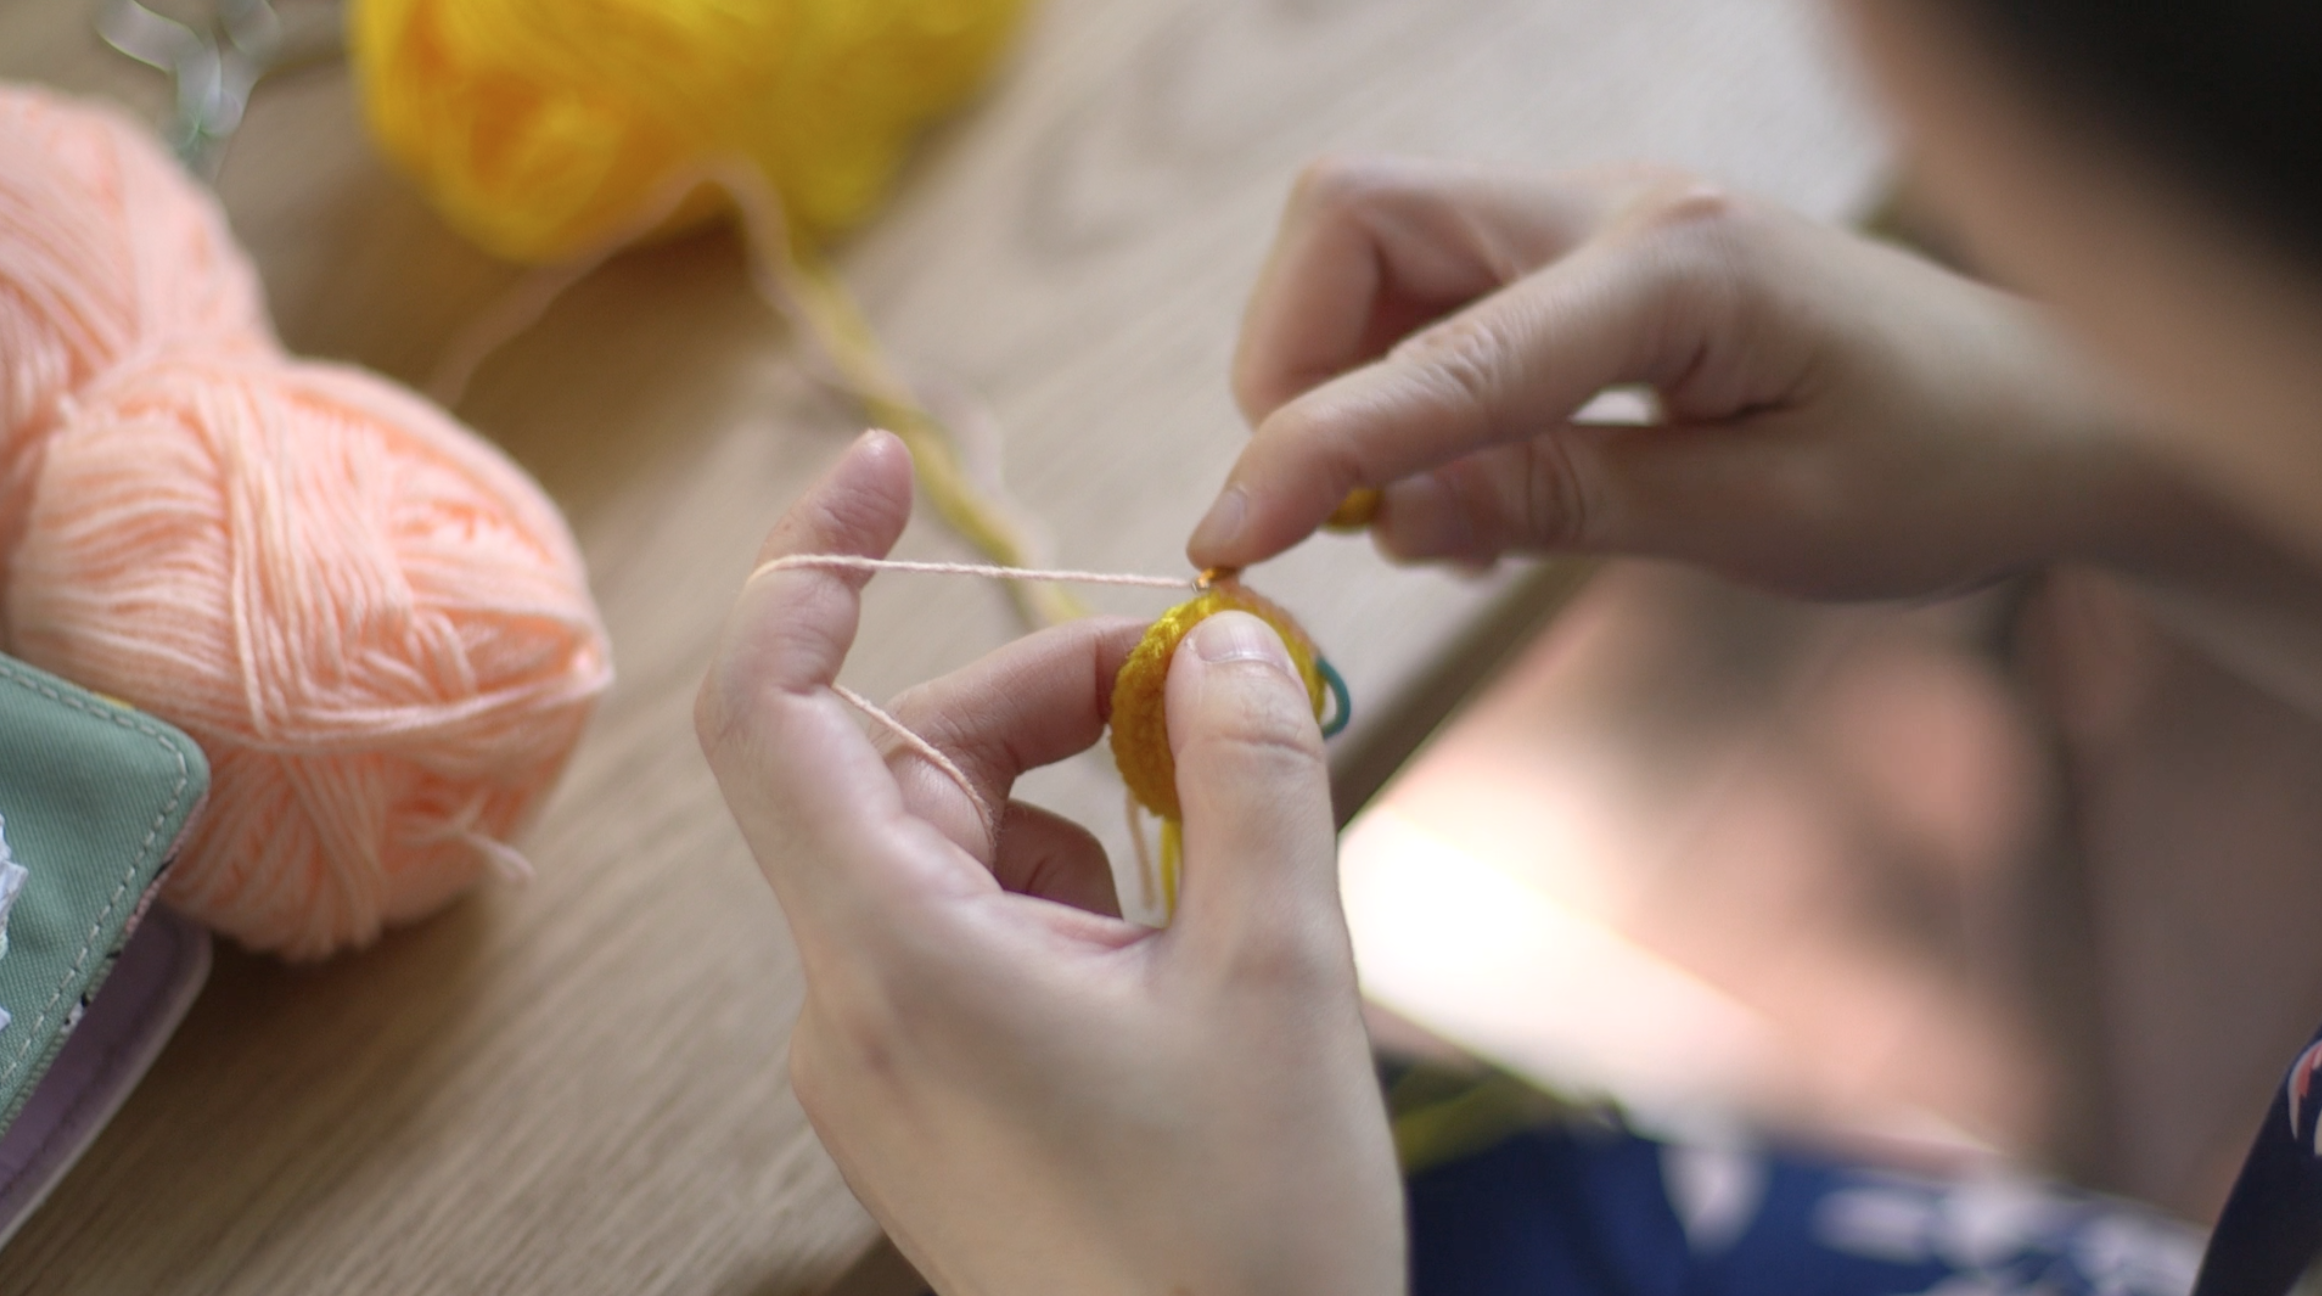 Amigurumi Shaping Starter Guide — Pocket Yarnlings